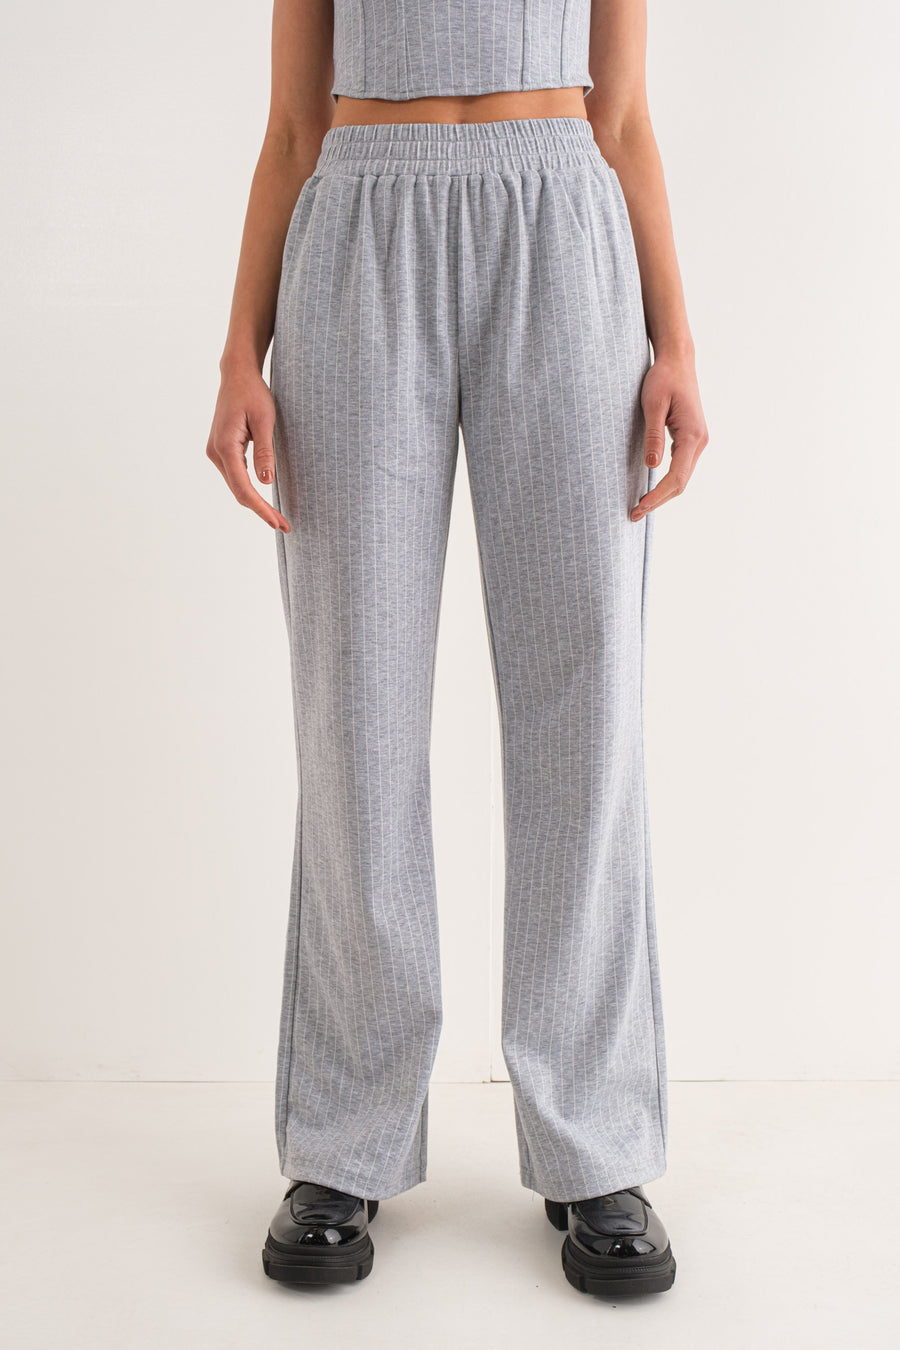 Heather Grey pinstripe pants with elastic waistband.